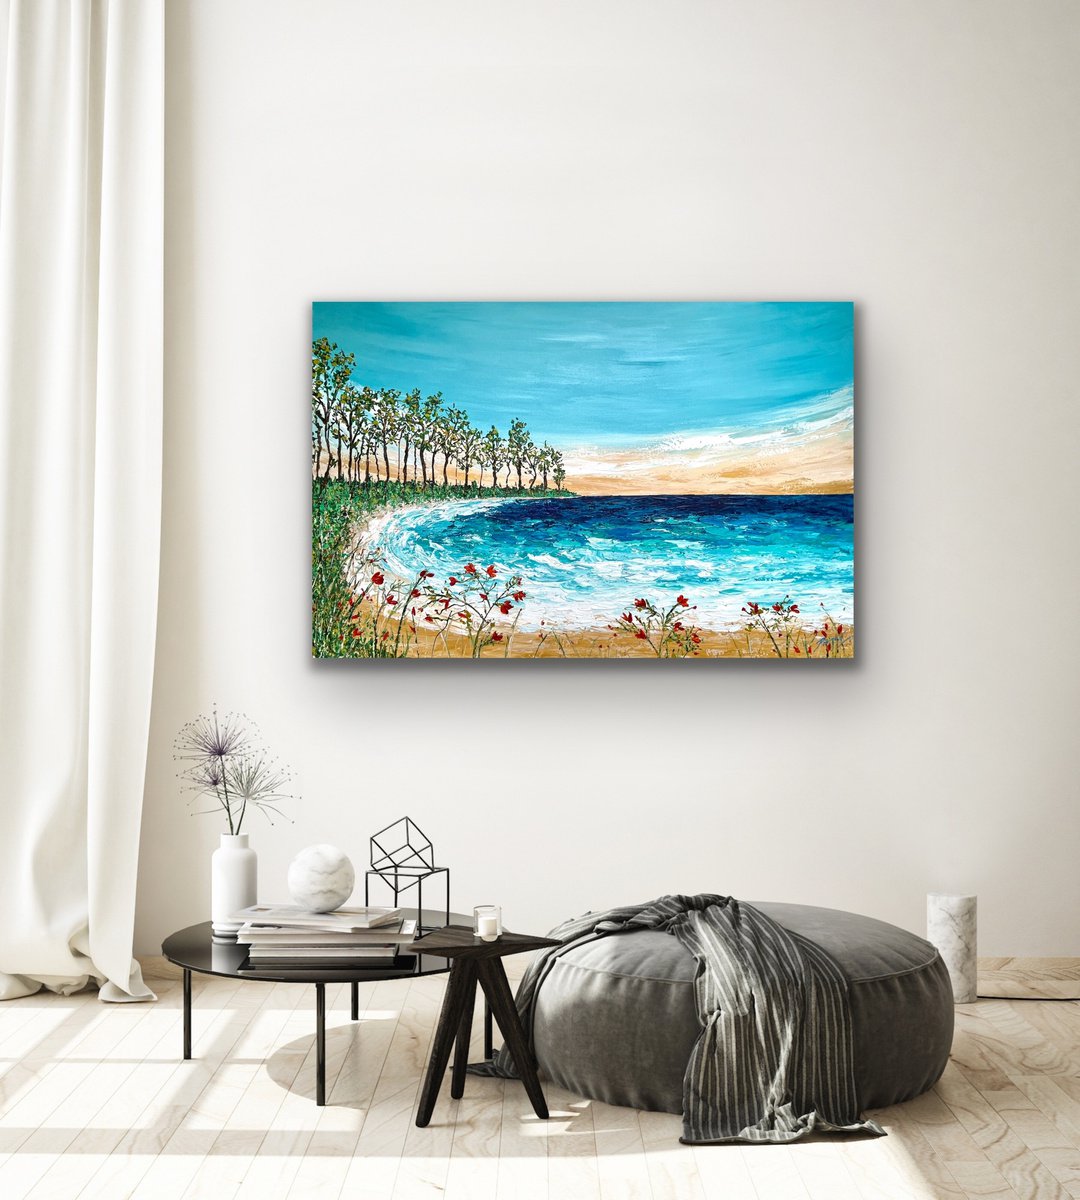 Tropical Blue Seascape and Sky - Pooja Verma by Pooja Verma